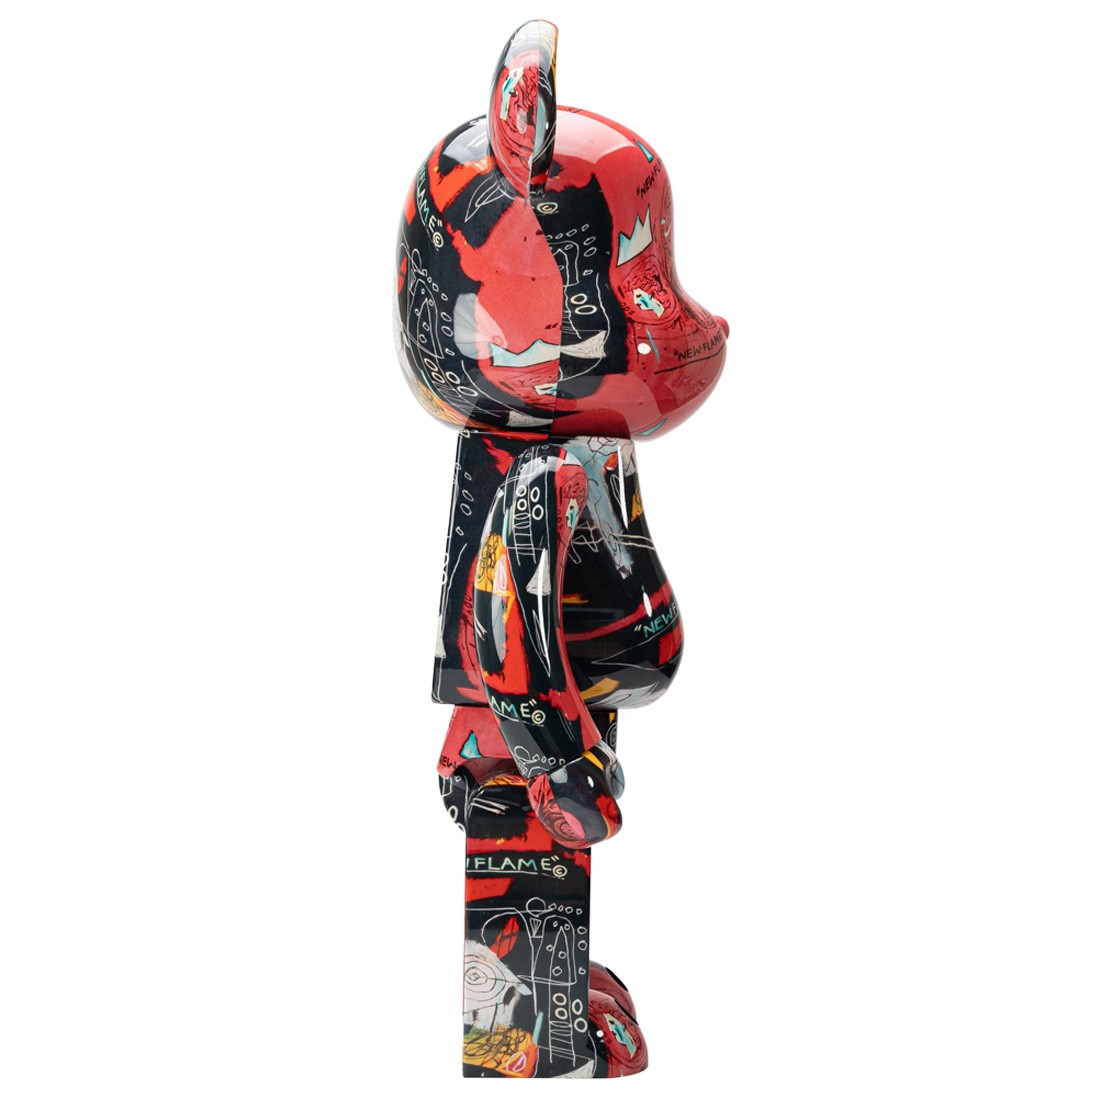 Medicom Andy Warhol x Jean-Michel Basquiat #1 1000% Bearbrick Figure (red)